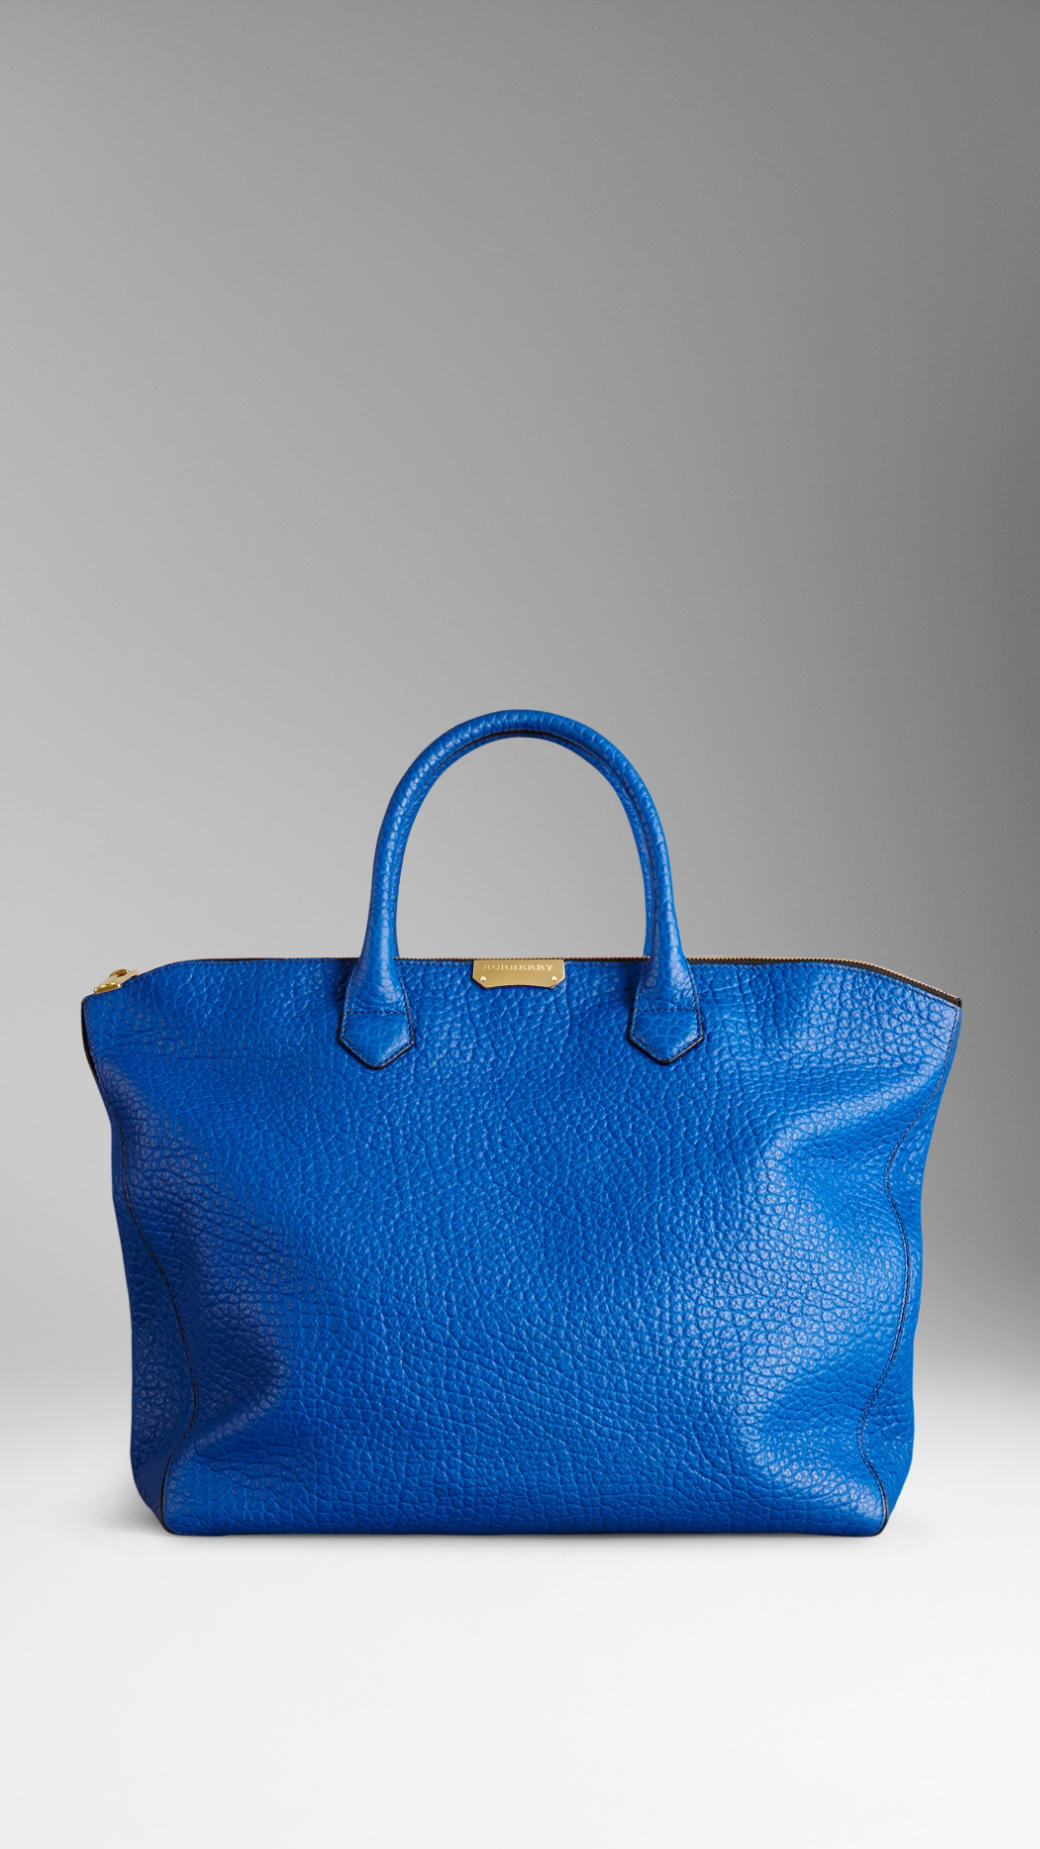 Burberry Large Signature Grain Leather Tote Bag in Blue (ultramarine blue) | Lyst